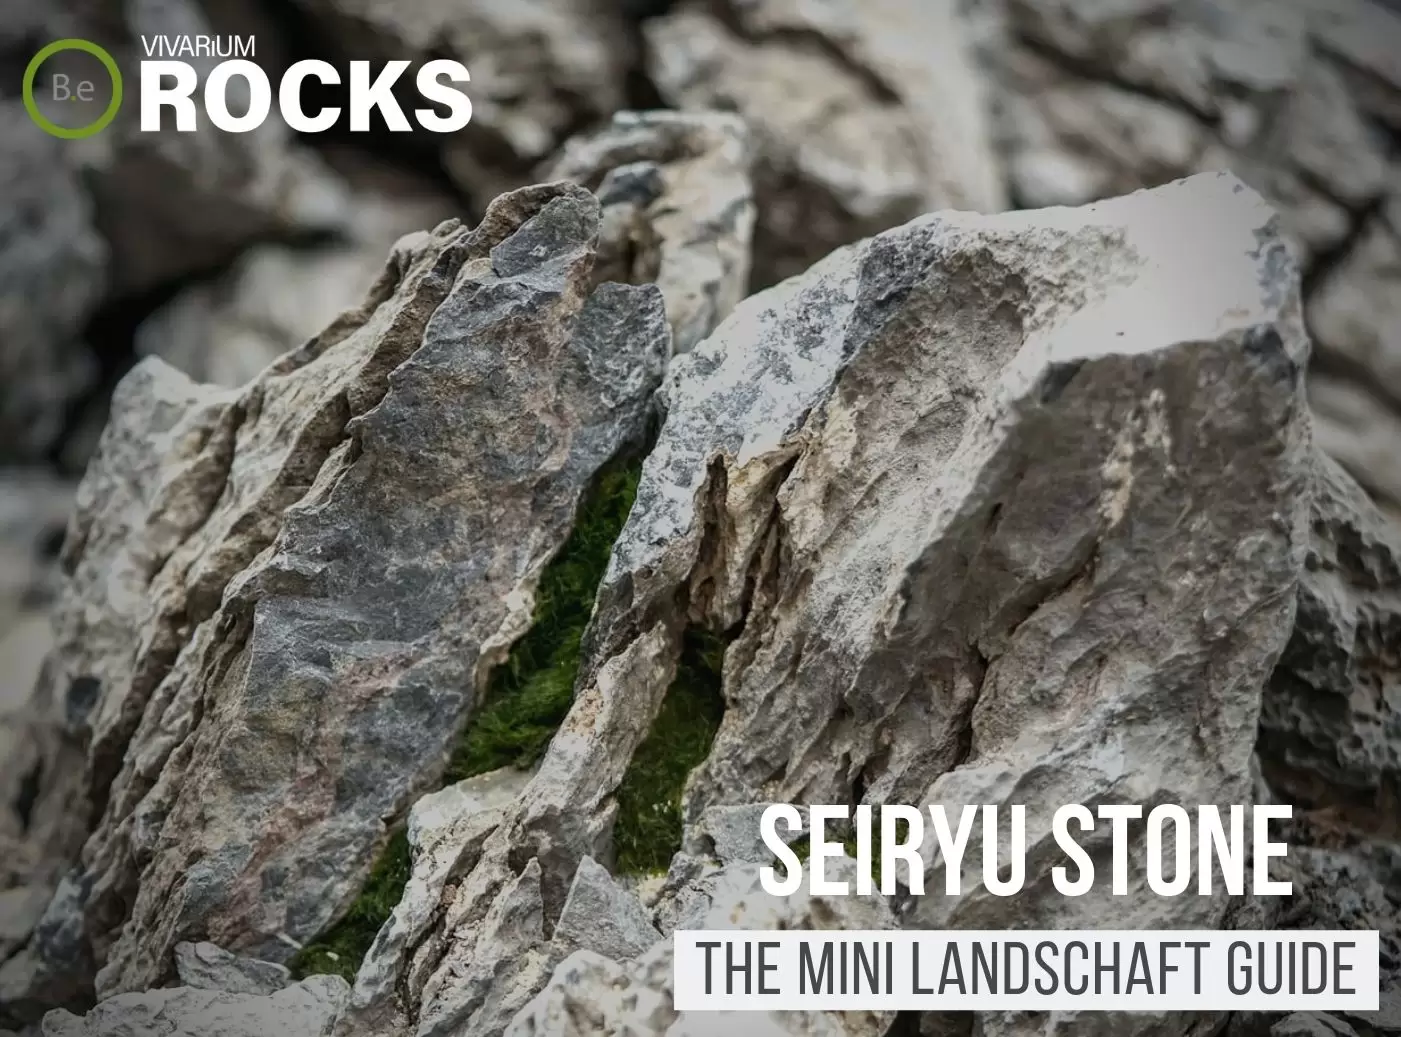 Seiryu Stone "Mini Landschaft" Hardscape Guide